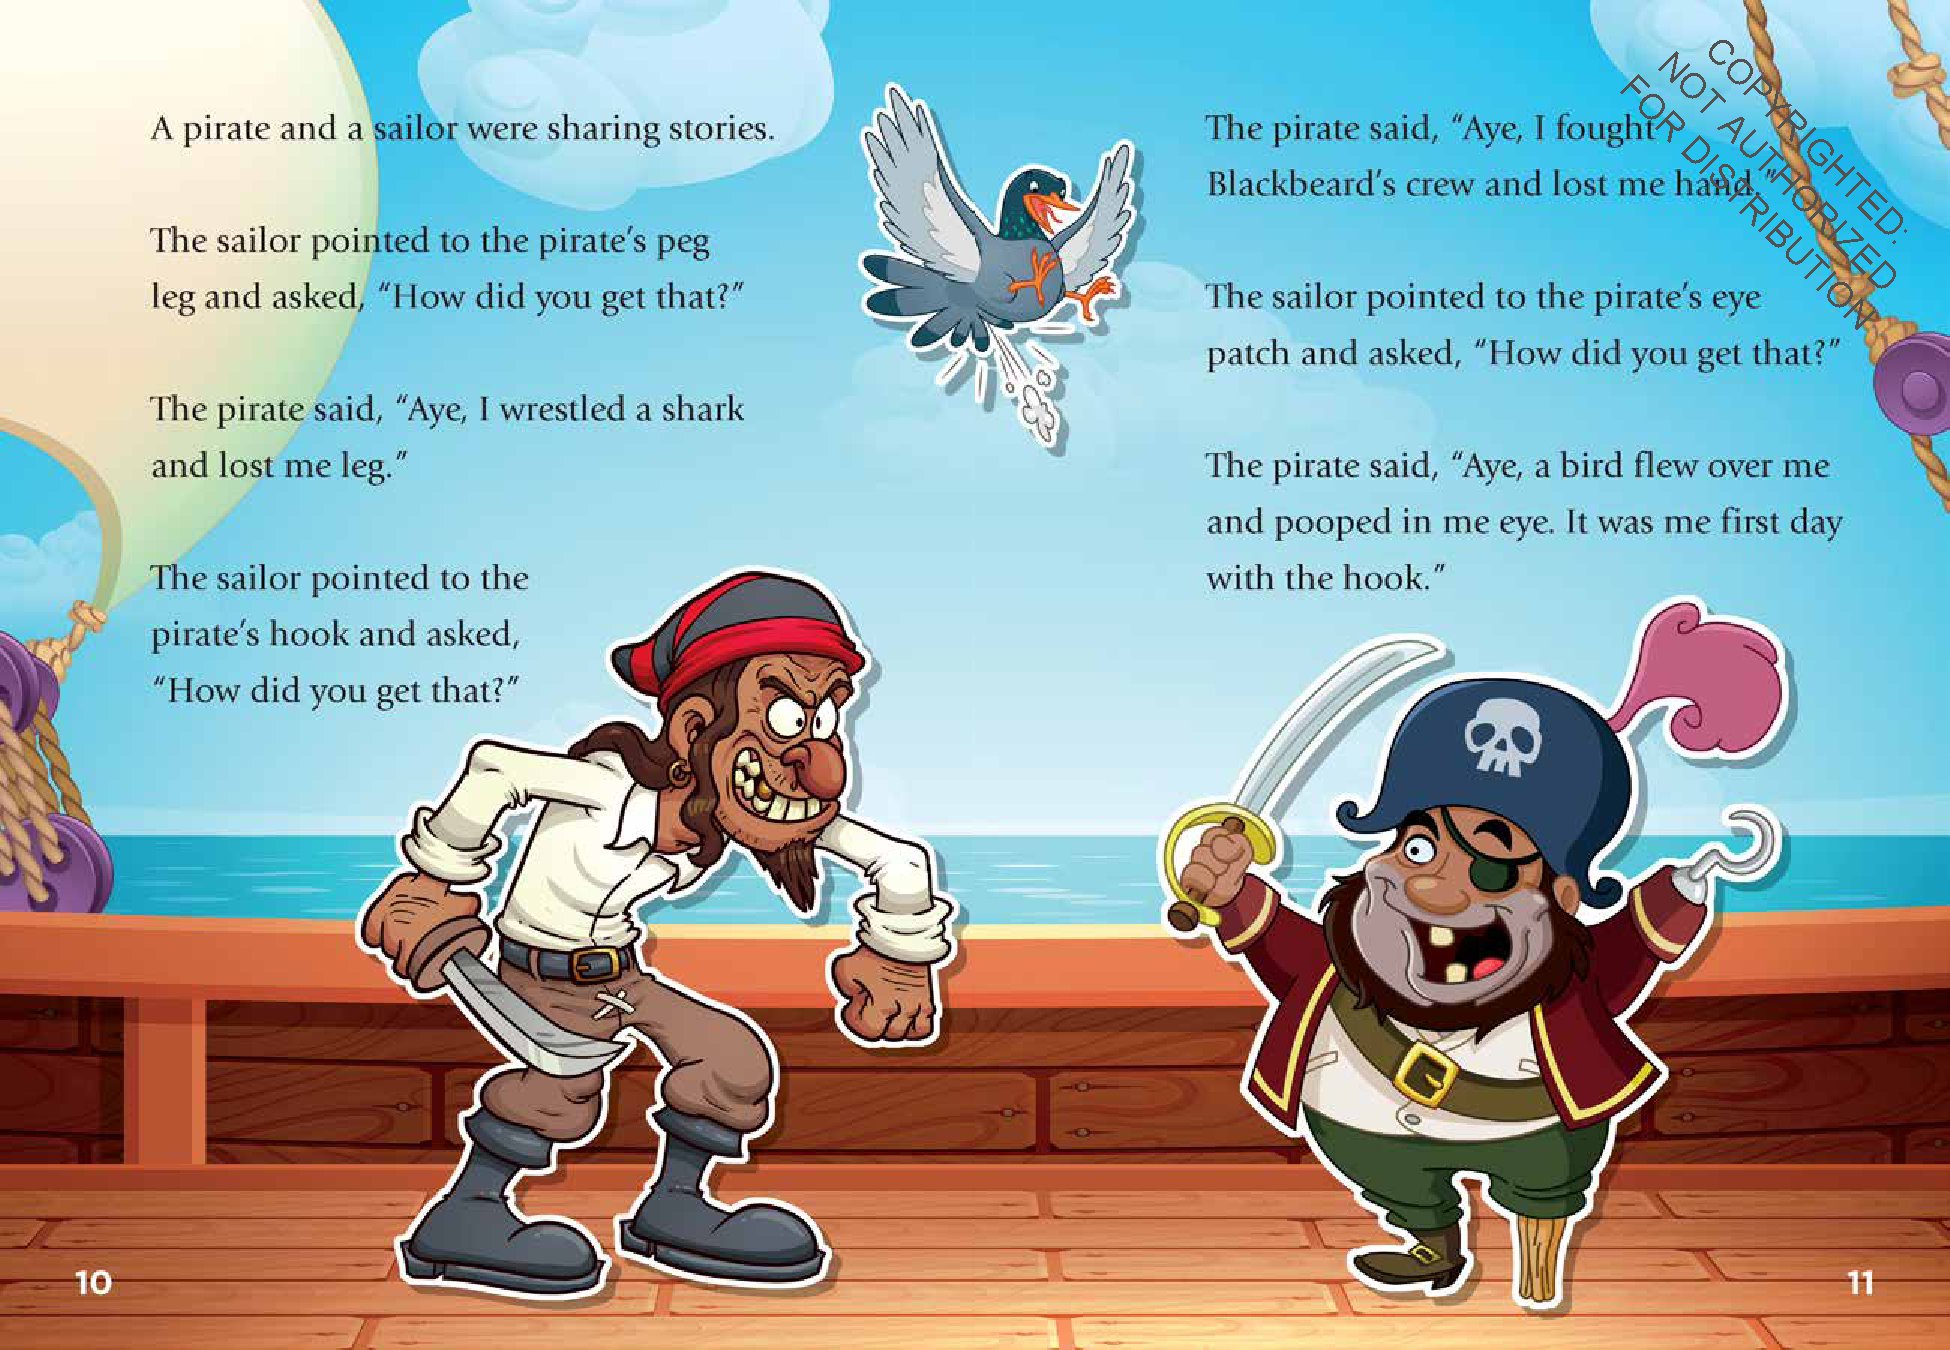 Secretly Treasured Jokes about Pirates